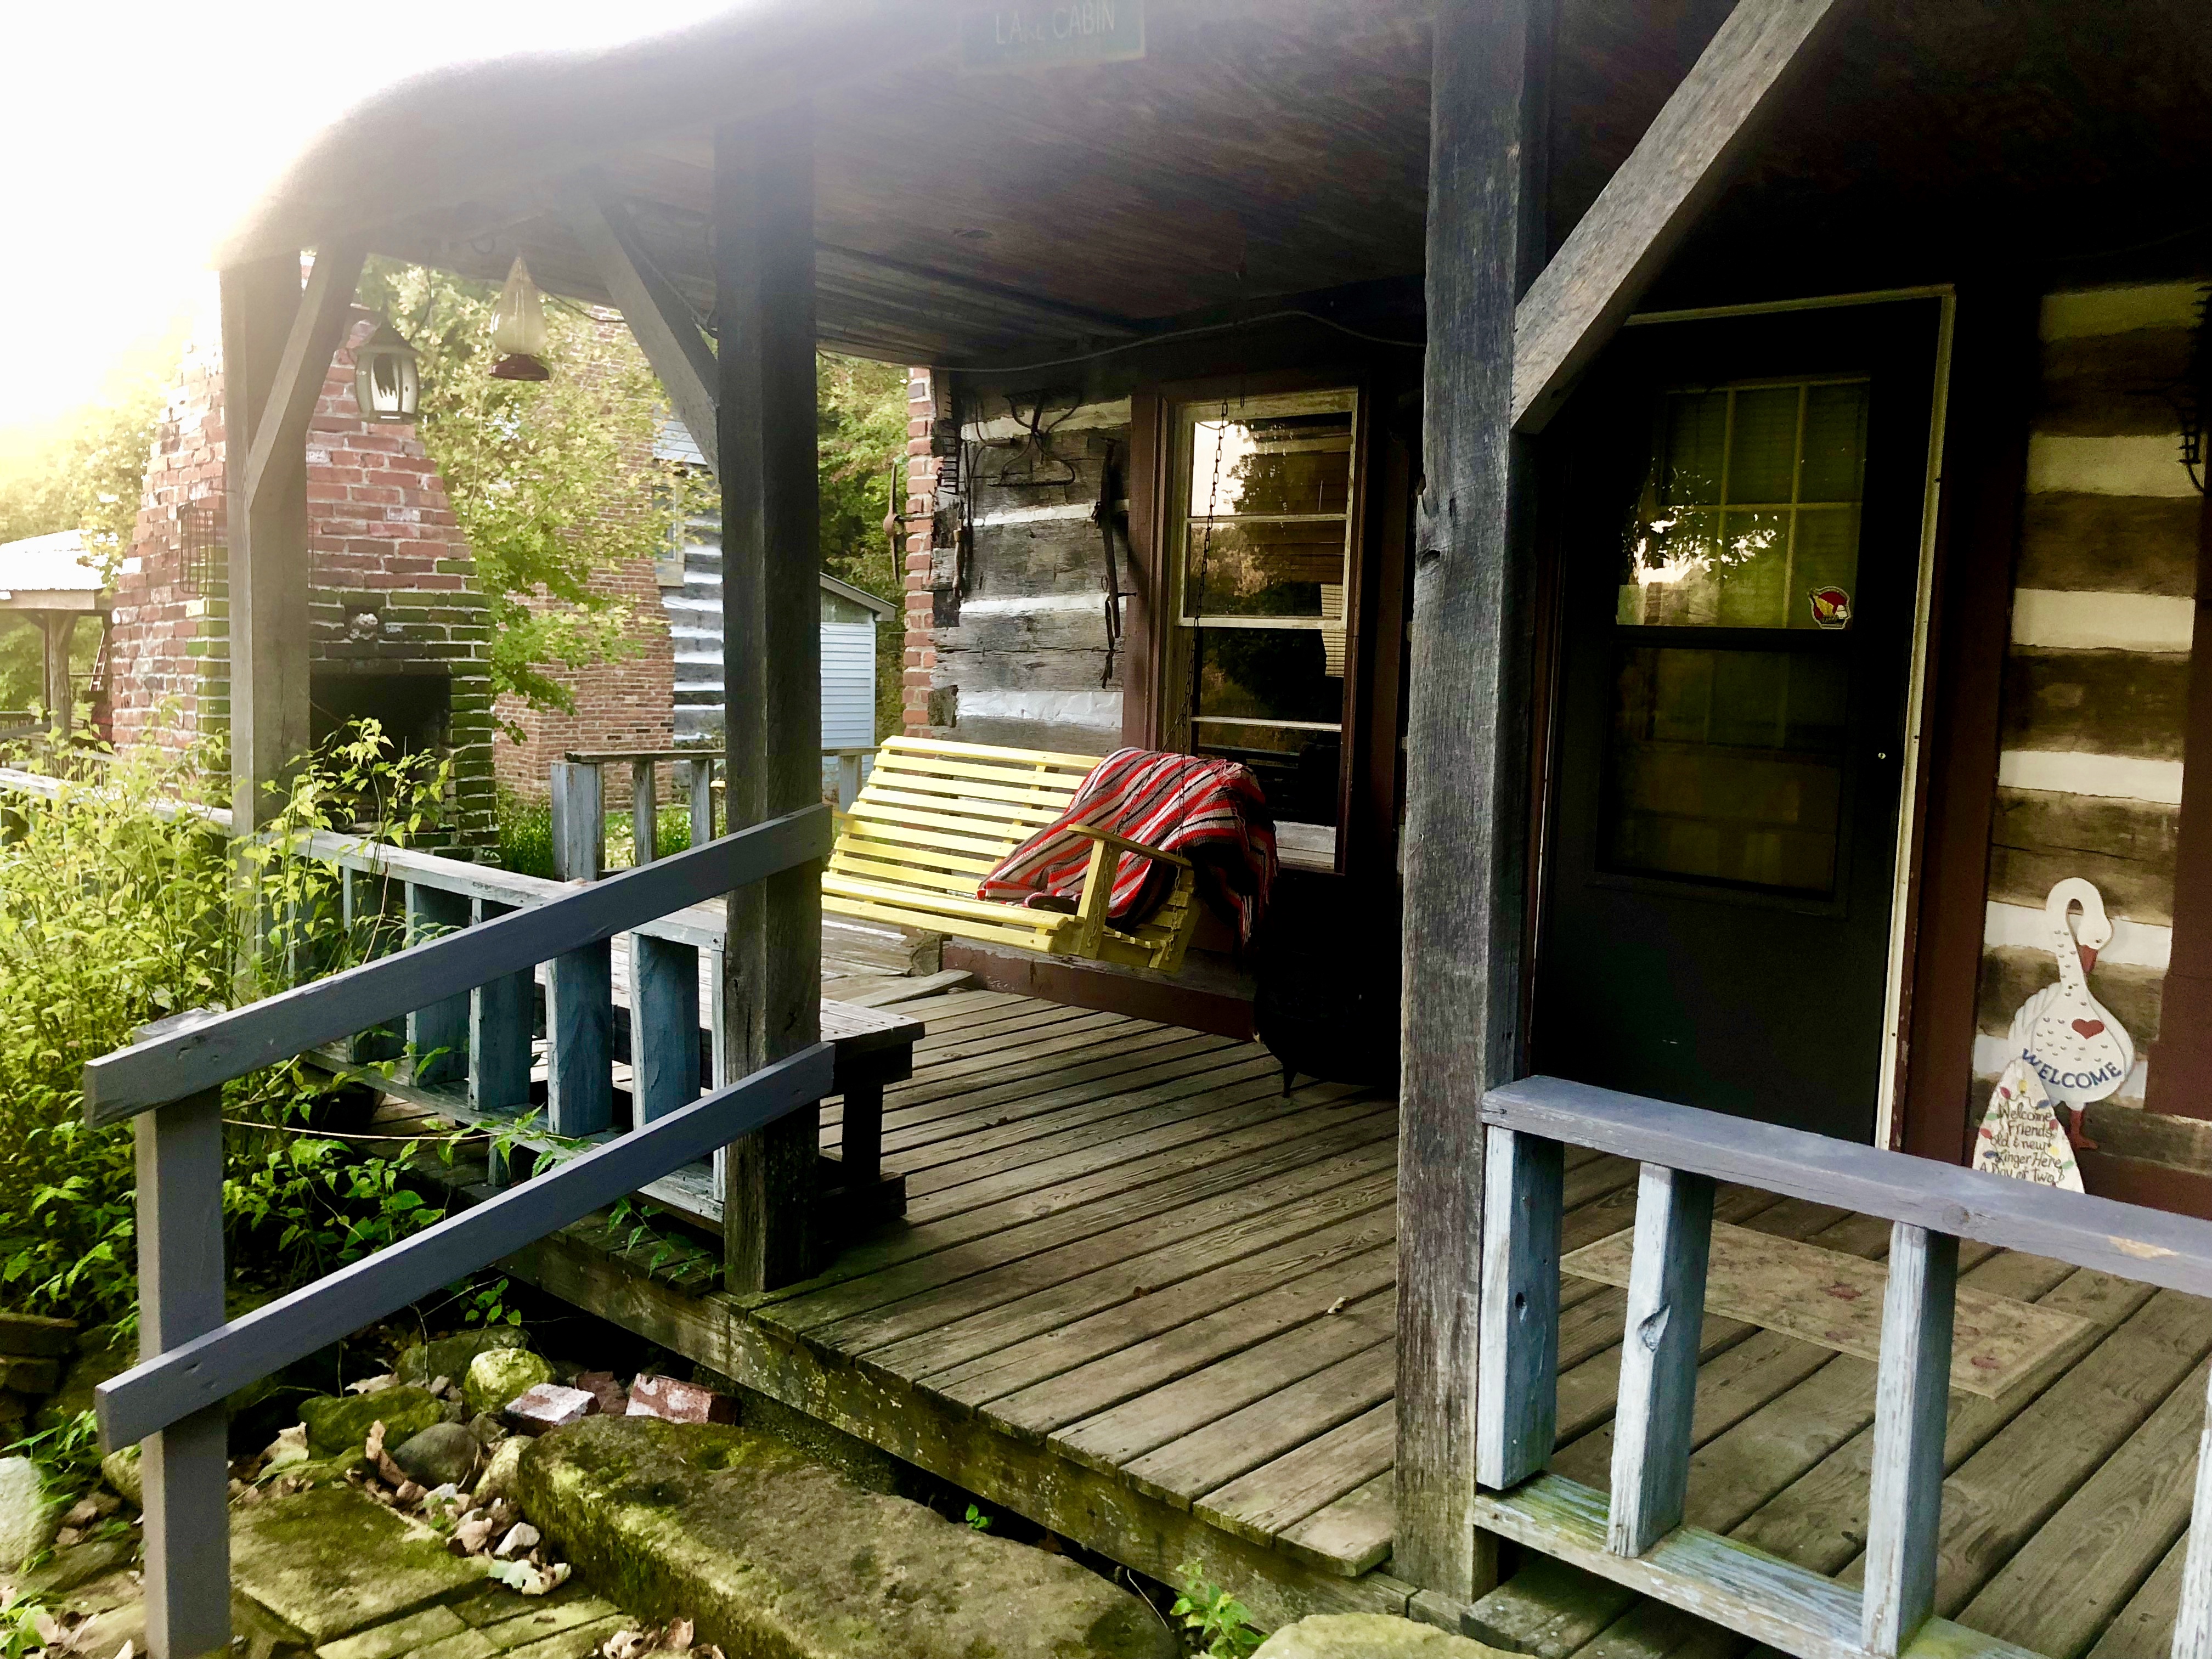 Authentic 1800's Shawnee National Forest Cabin Rentals: Olde Squat Inn , #petfriendly #cozy #rustic #quaint #historic #bedandbreakfast #fishingpond #cabinrentals #shawneenationalforest 